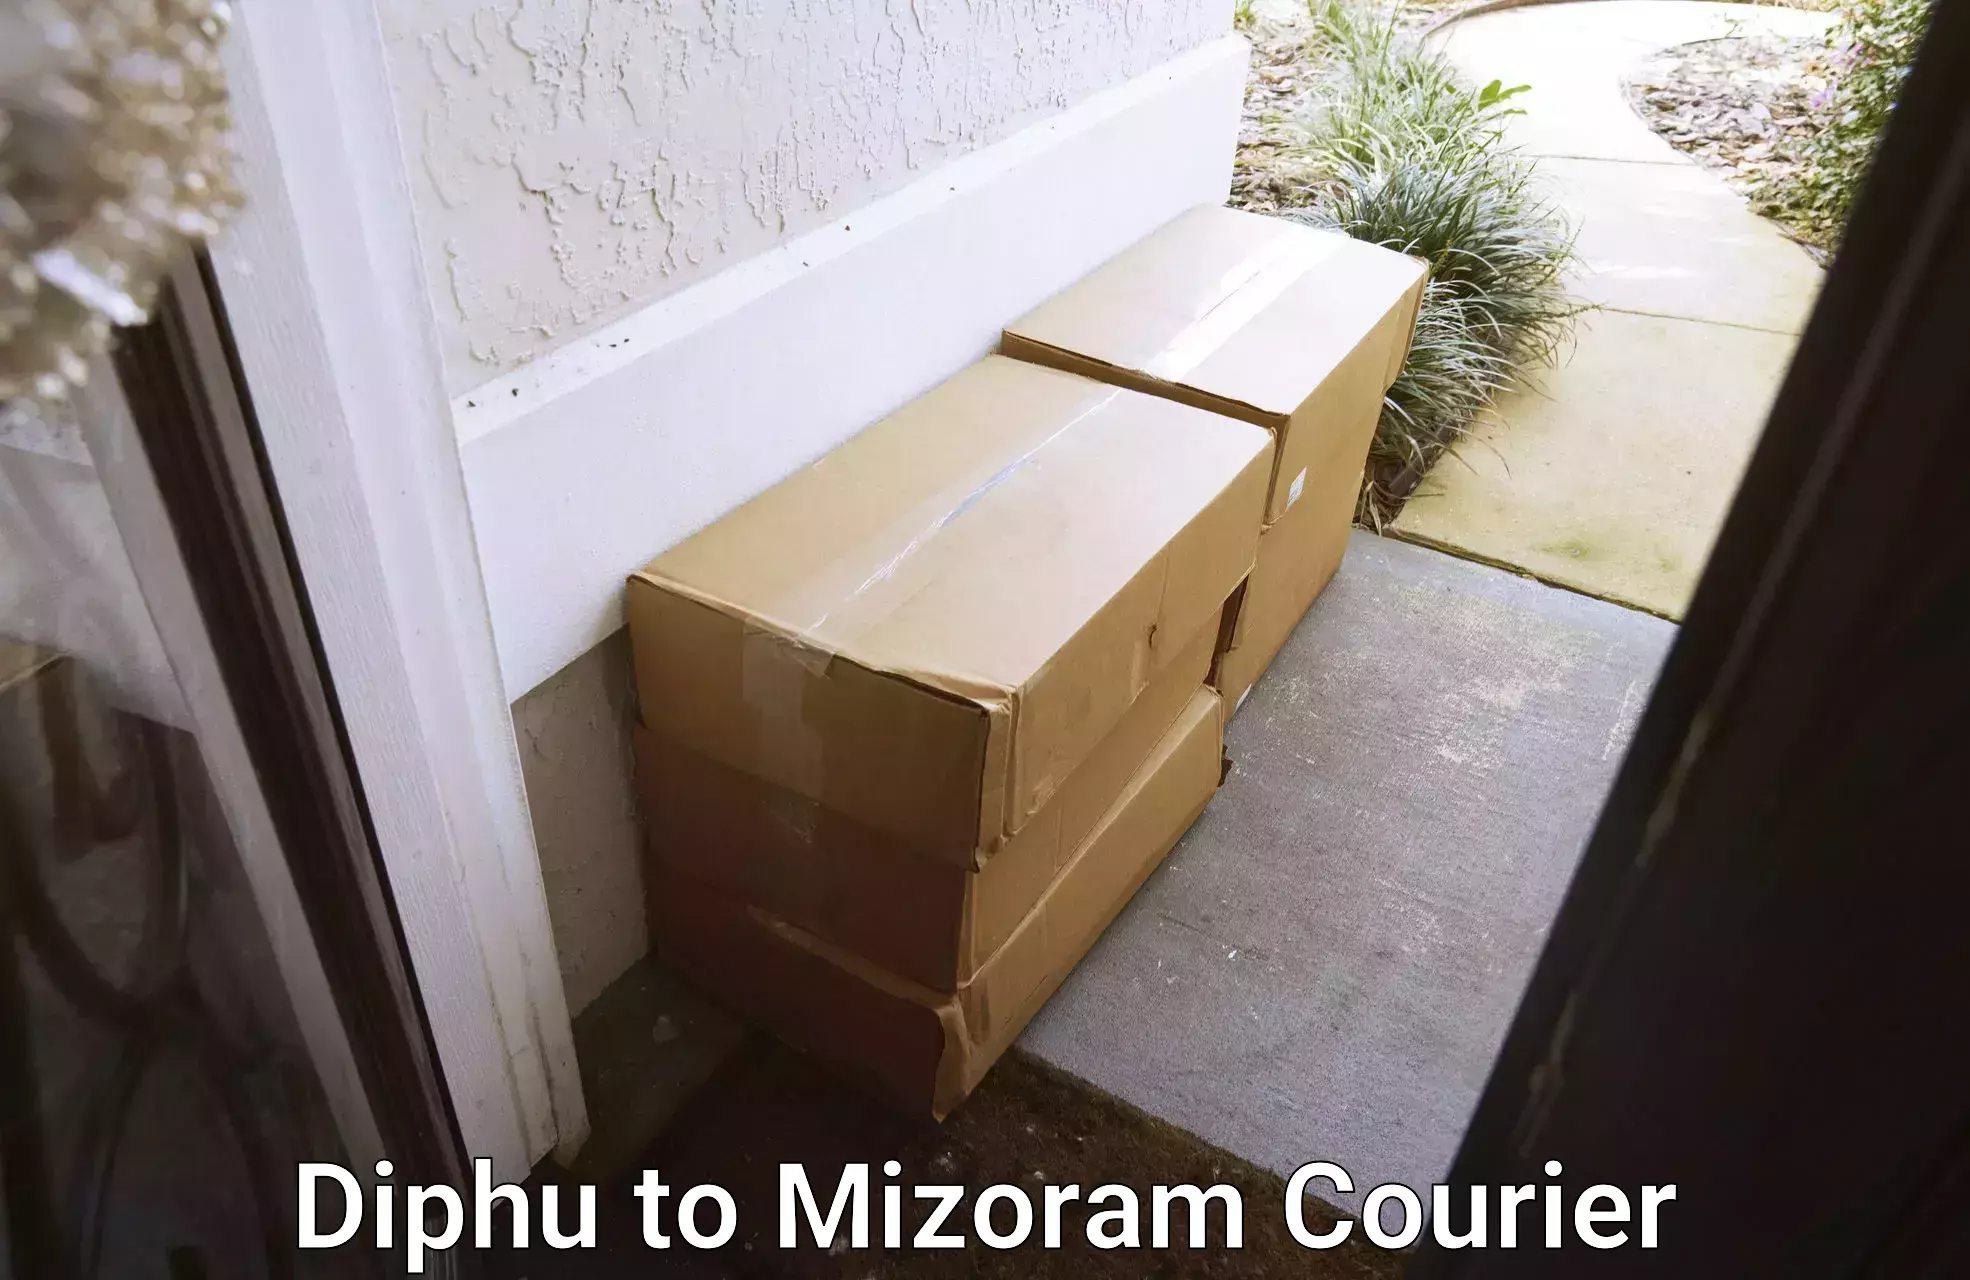 High-speed parcel service Diphu to Mizoram